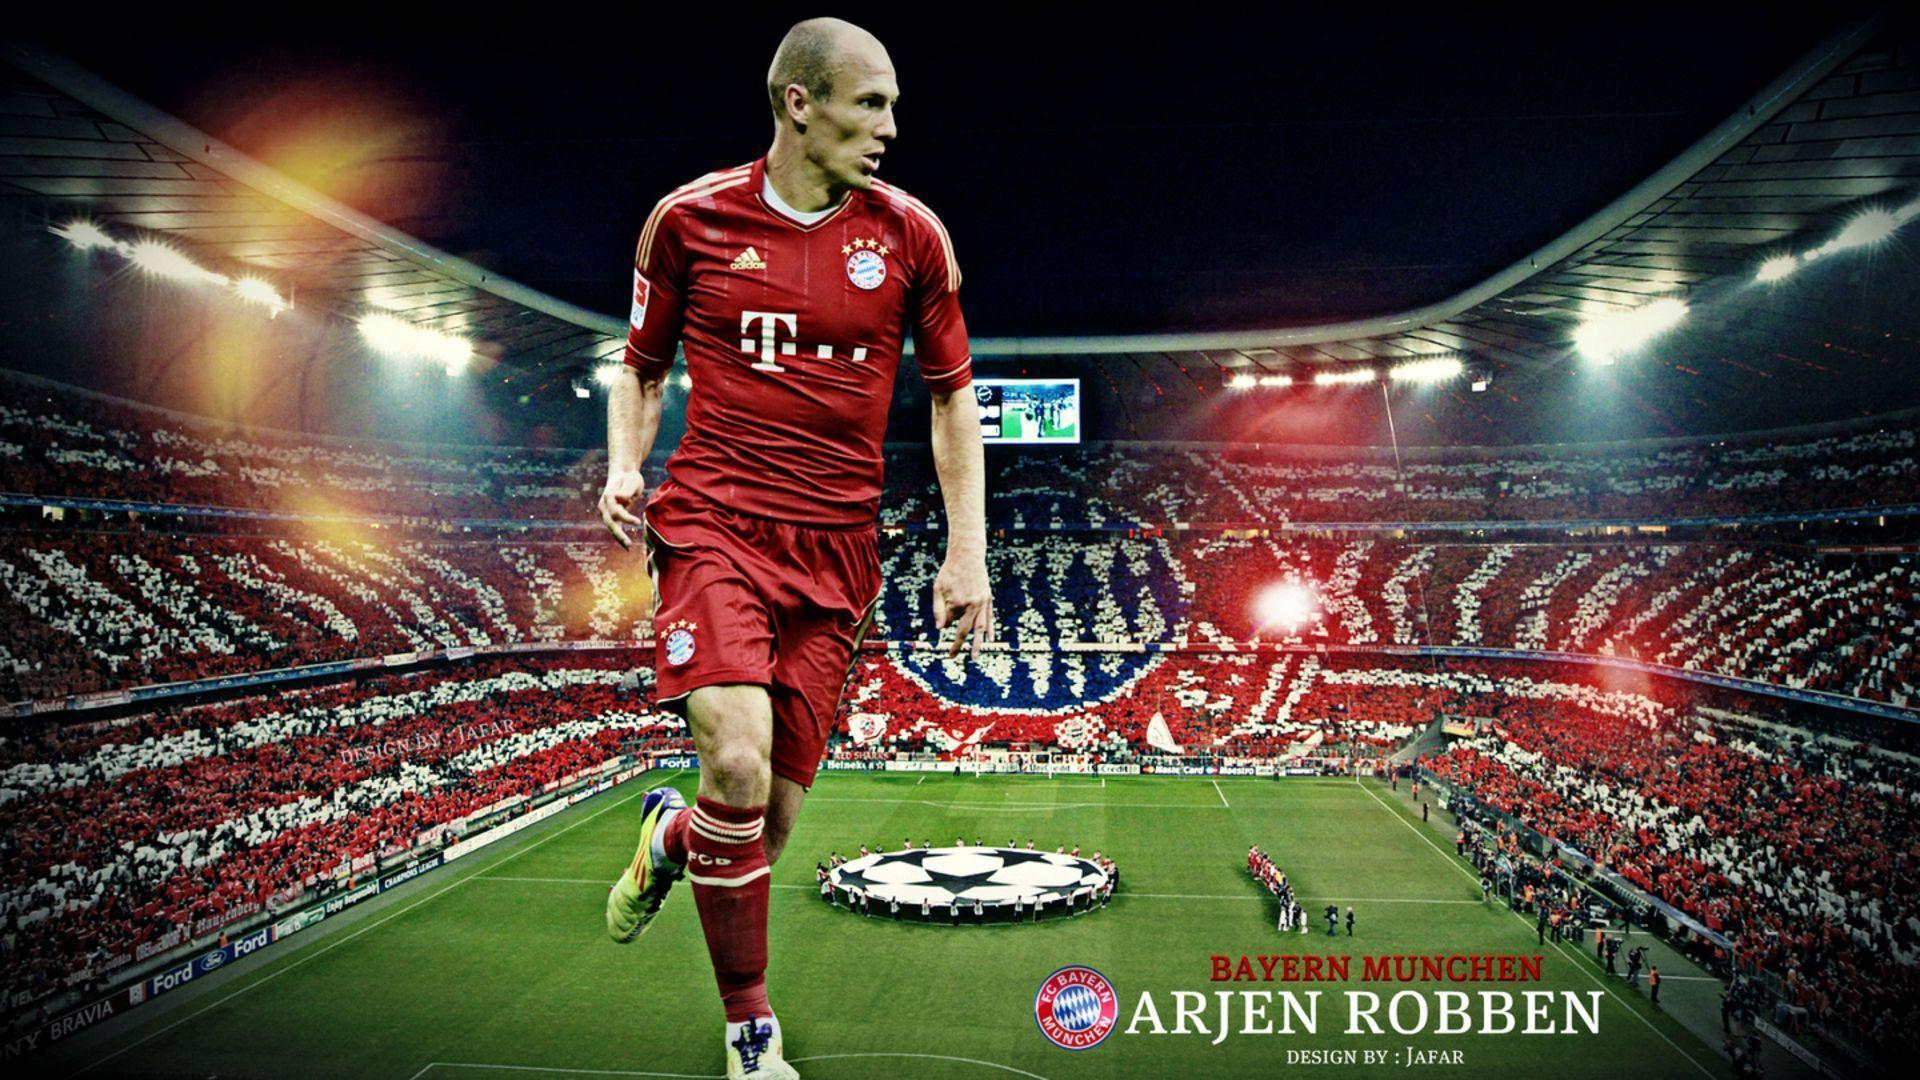 Bayern Arjen Robben on the background of the football field